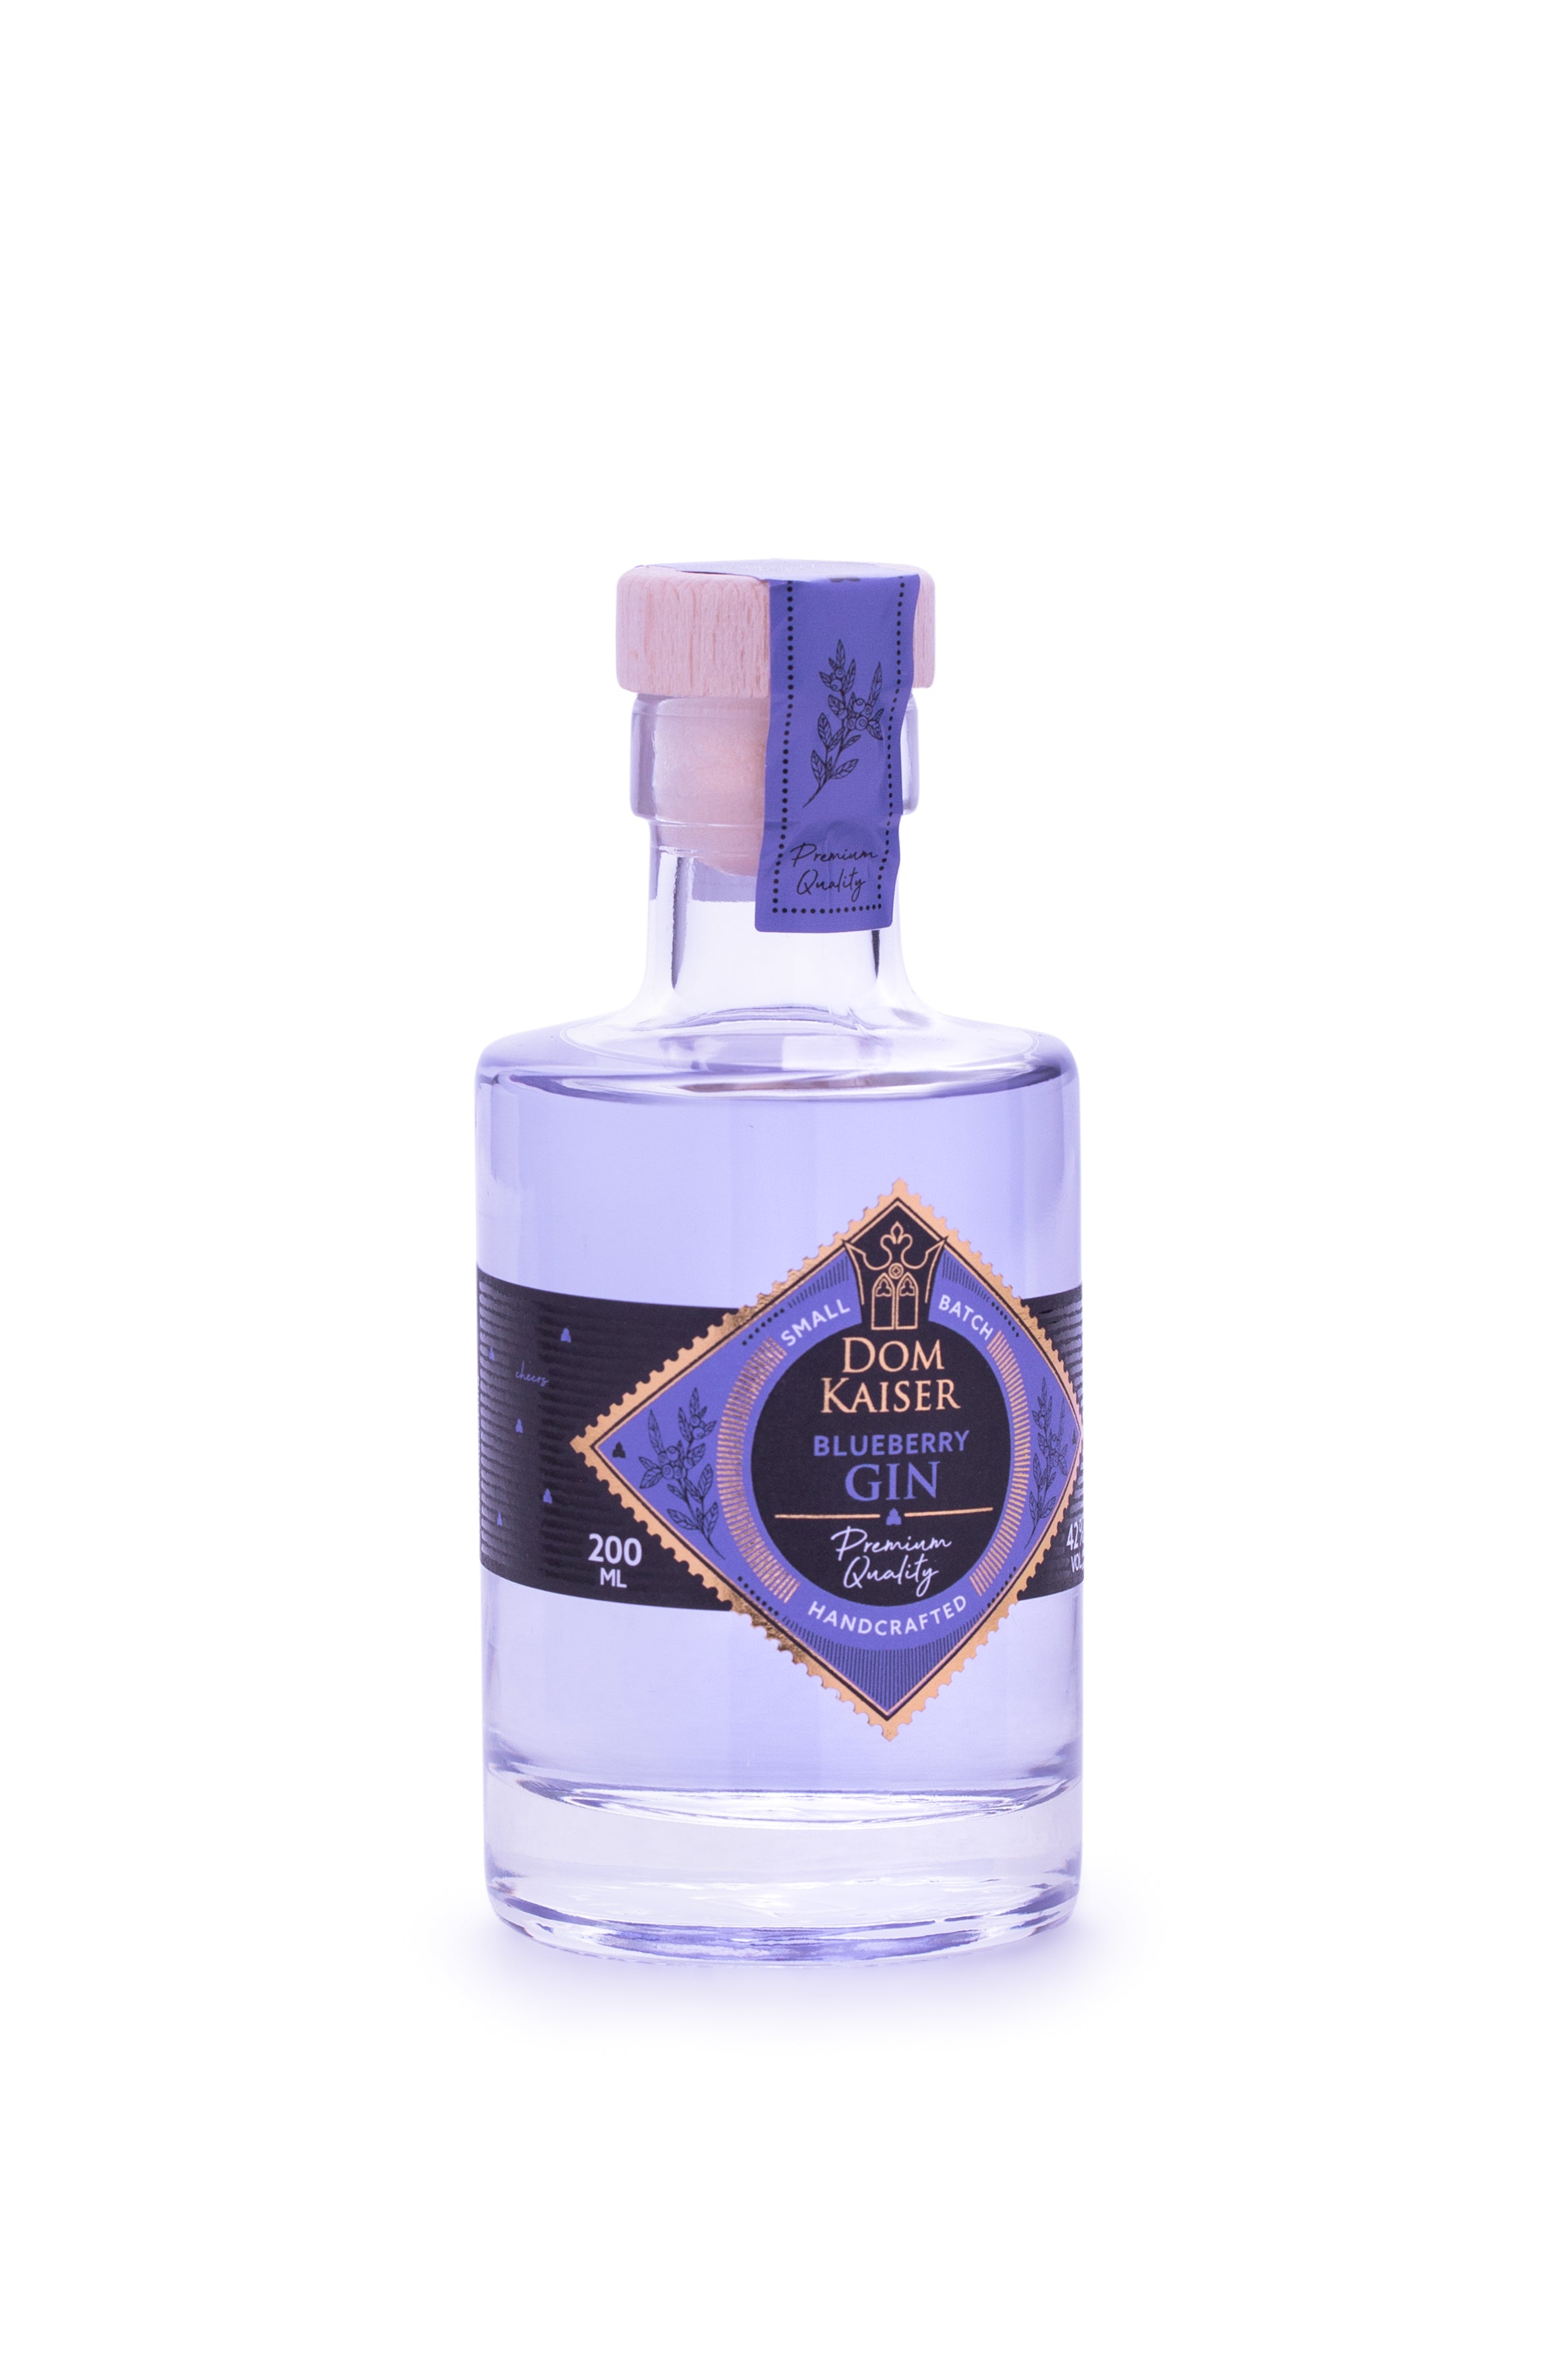 Domkaiser Blueberry Gin - small